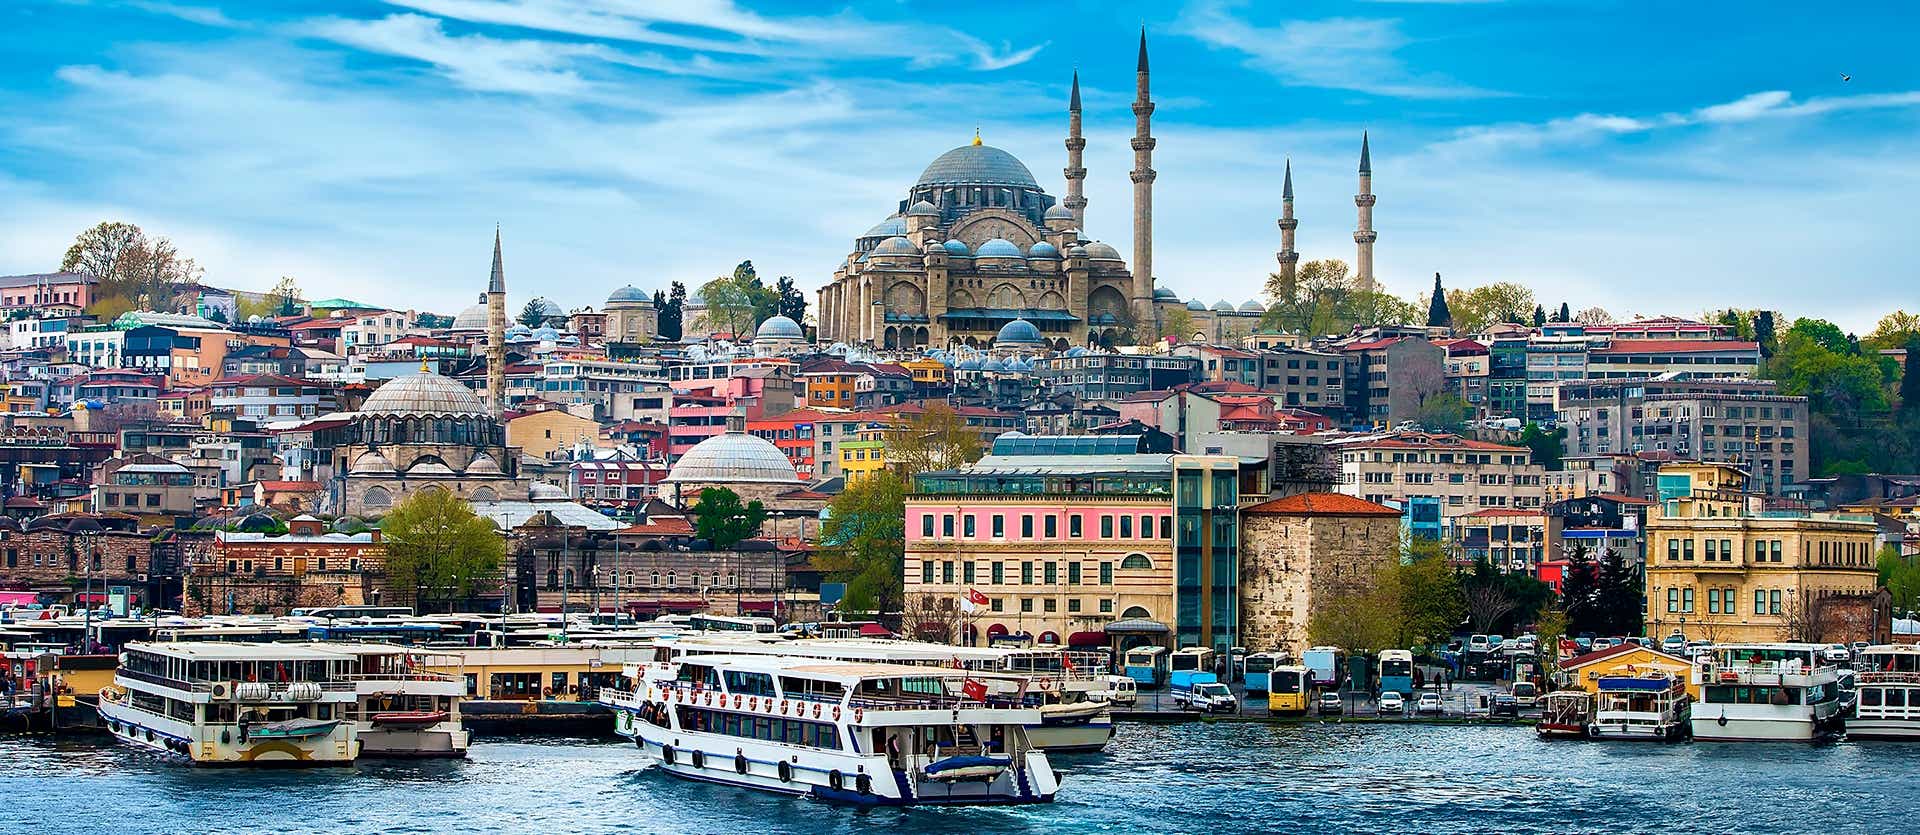 Istanbul <span class="iconos separador"></span> Turkey